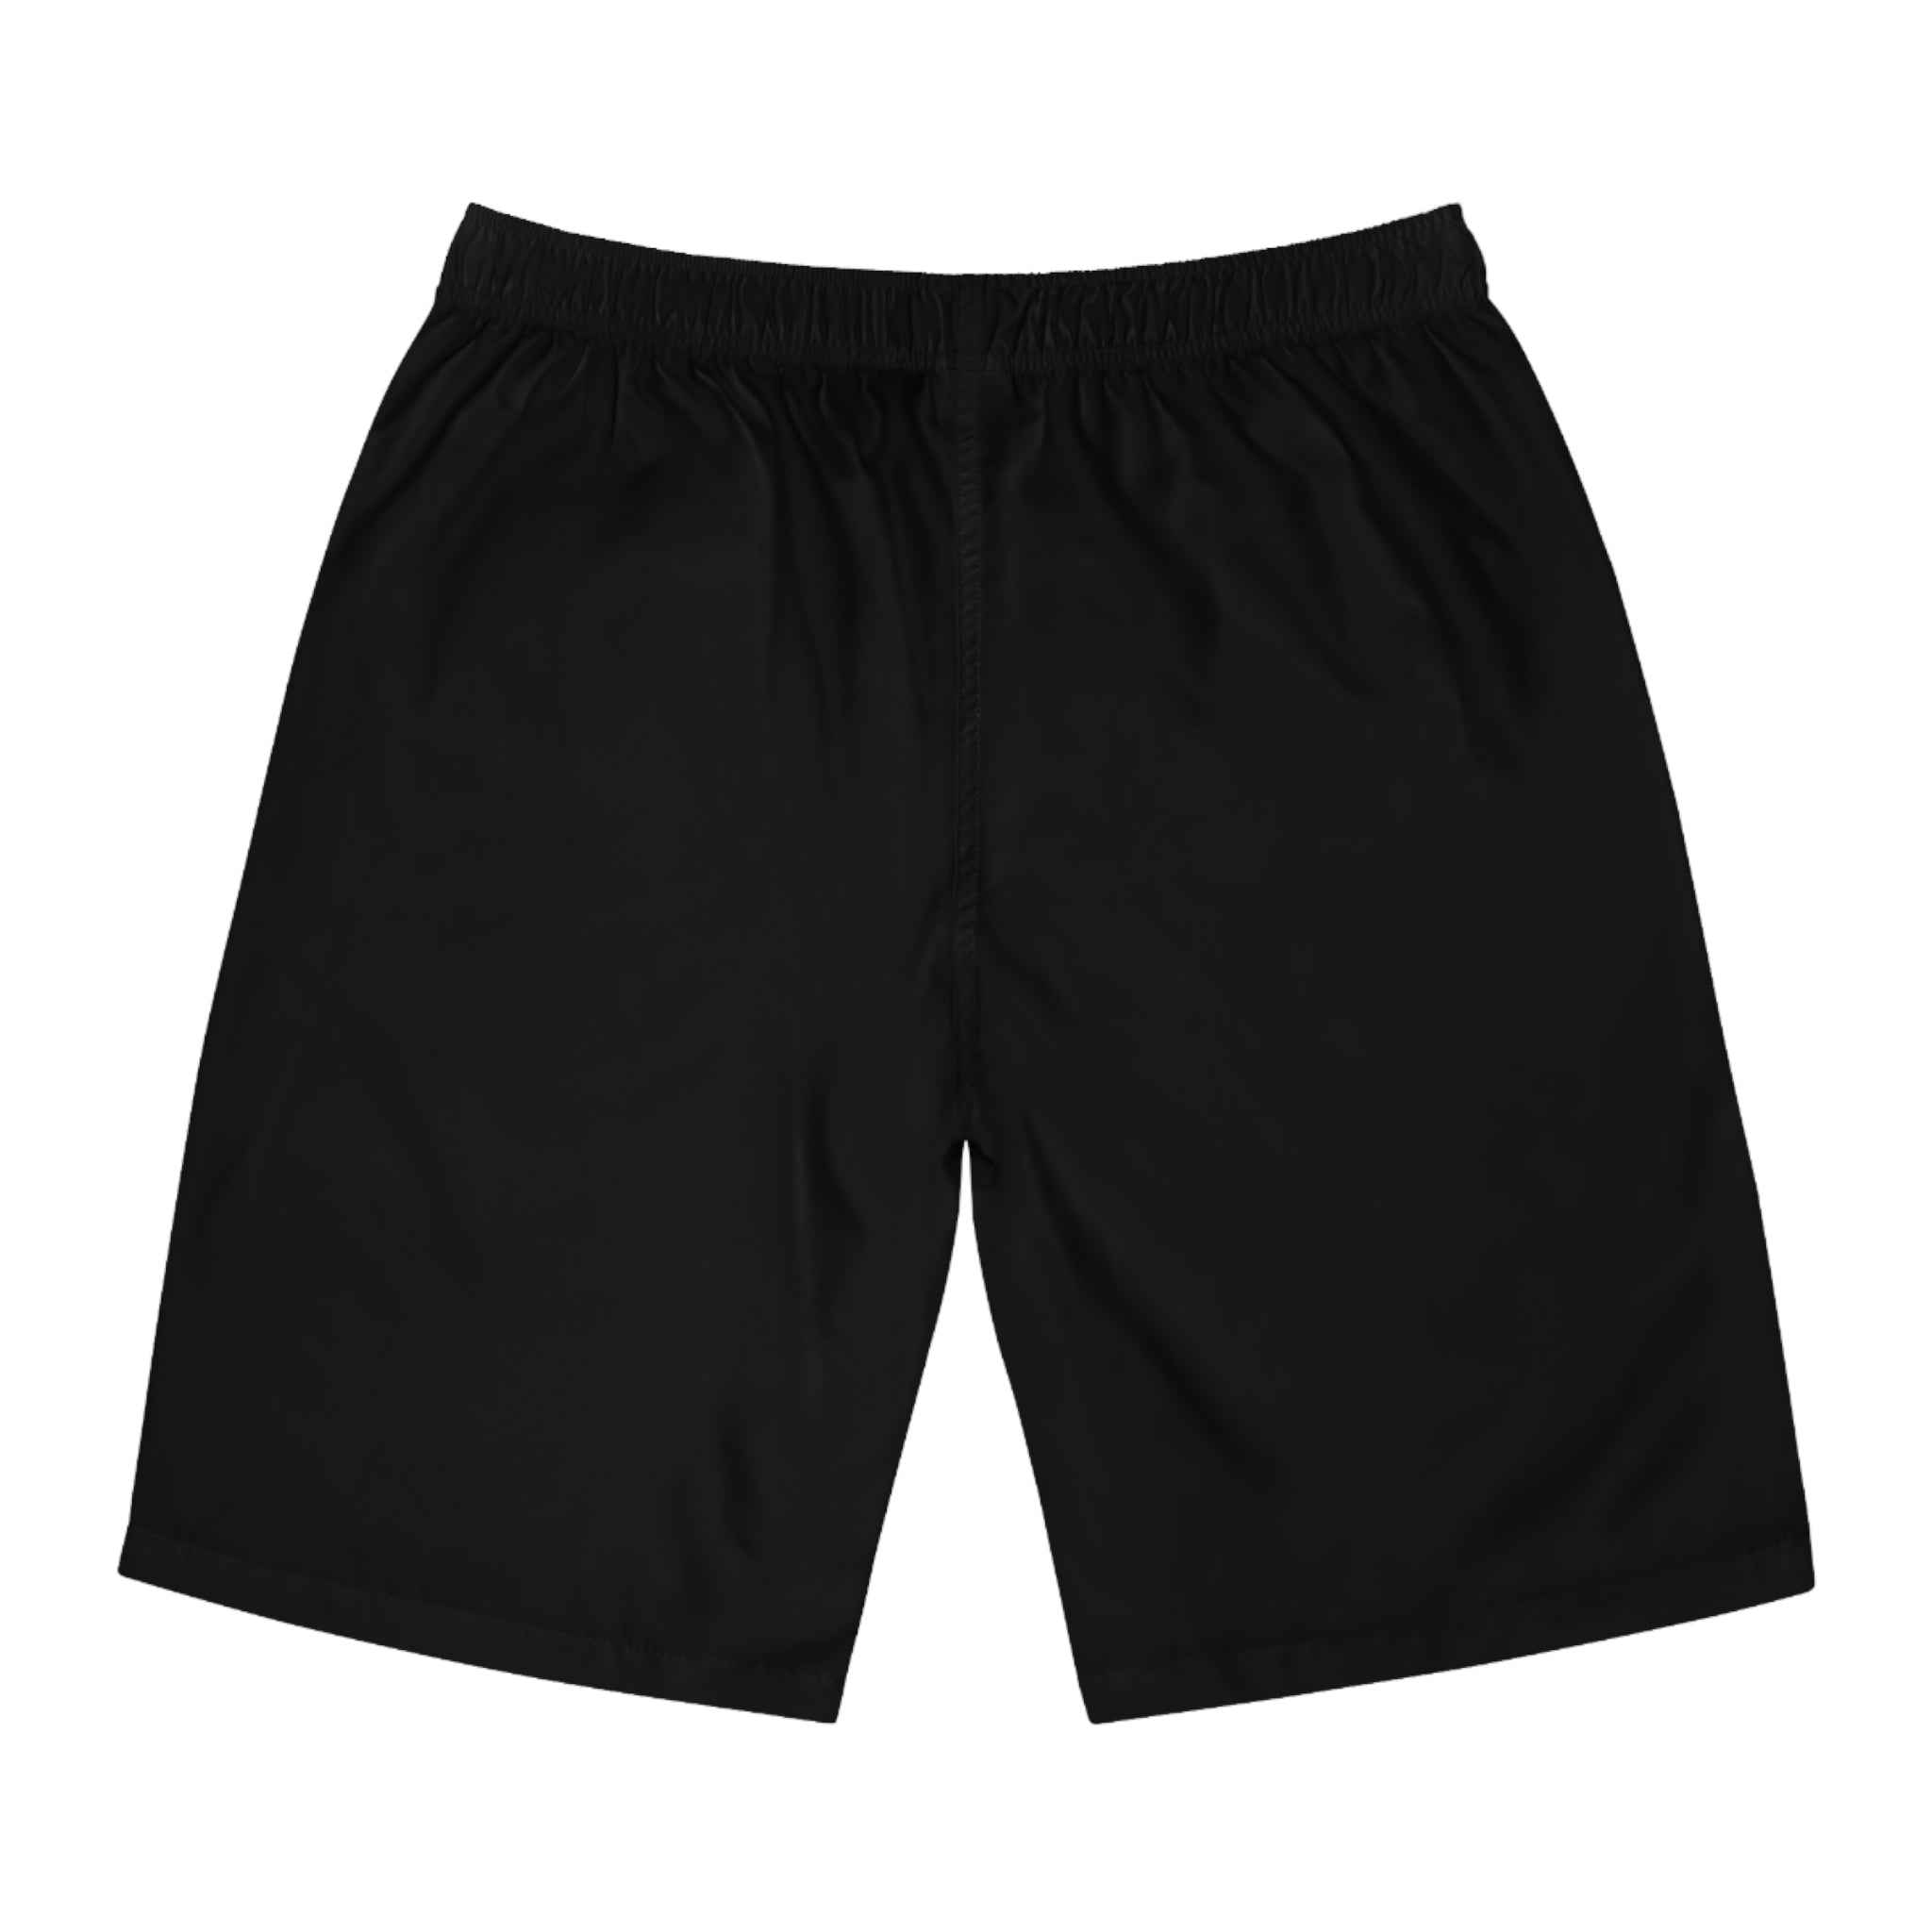 UHL Men's Board Shorts